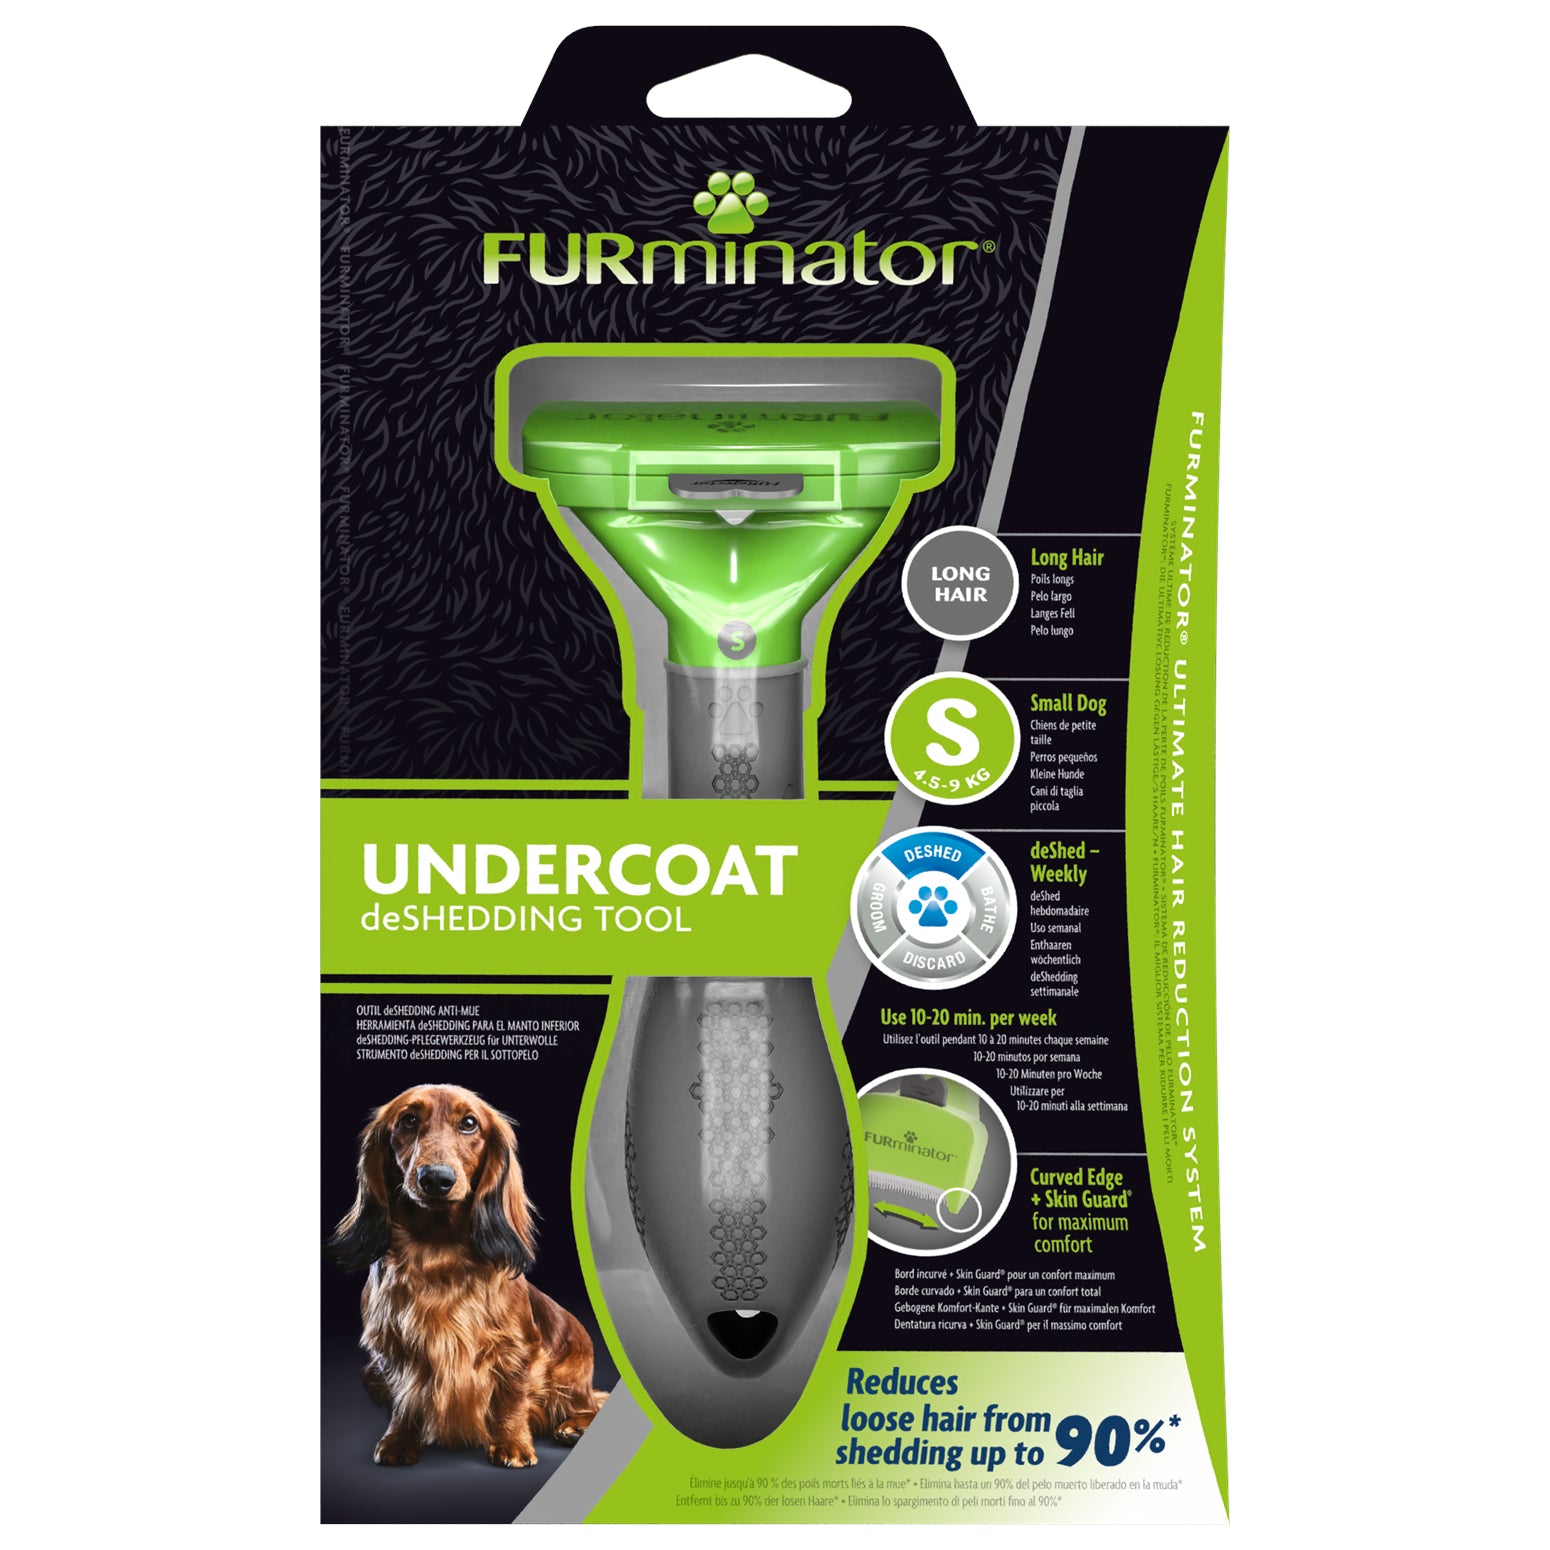 FURminator Undercoat deShedding Tools for Small Dogs